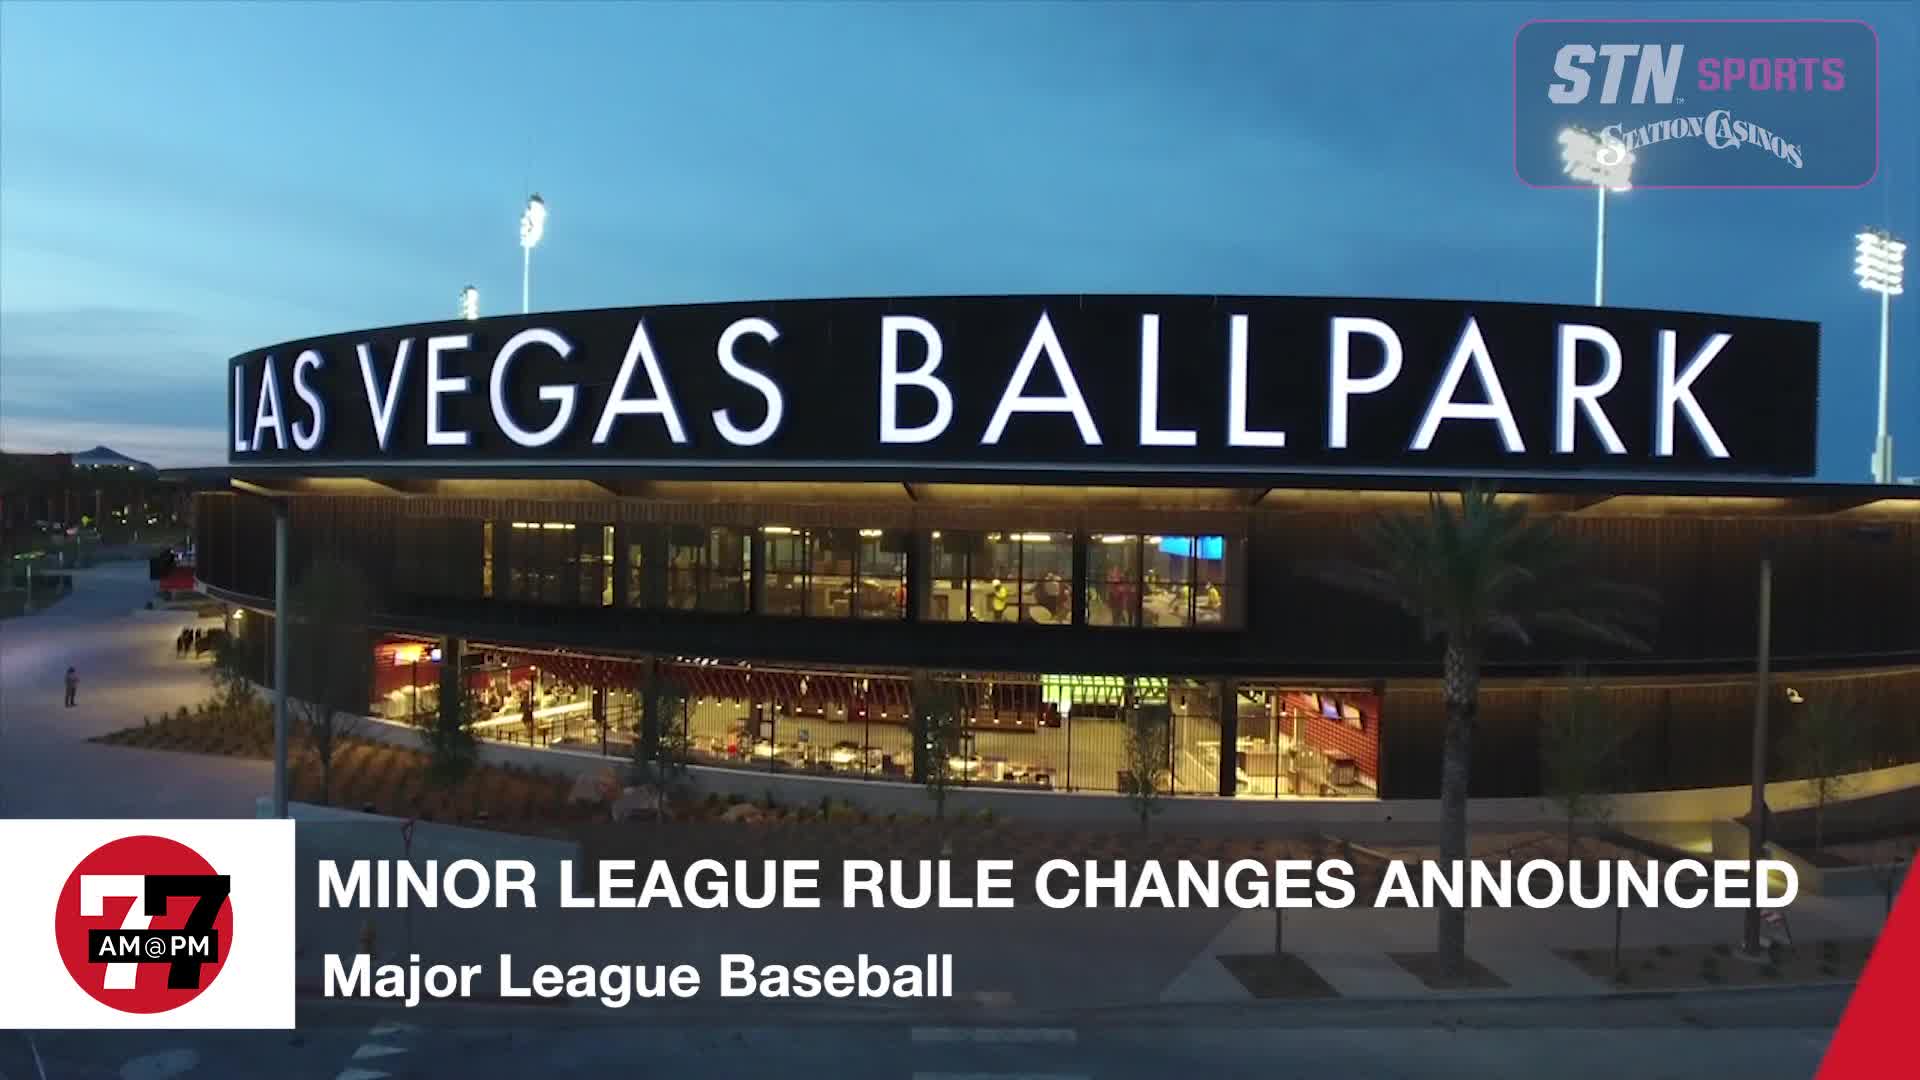 Minor League Rule Changes Announced